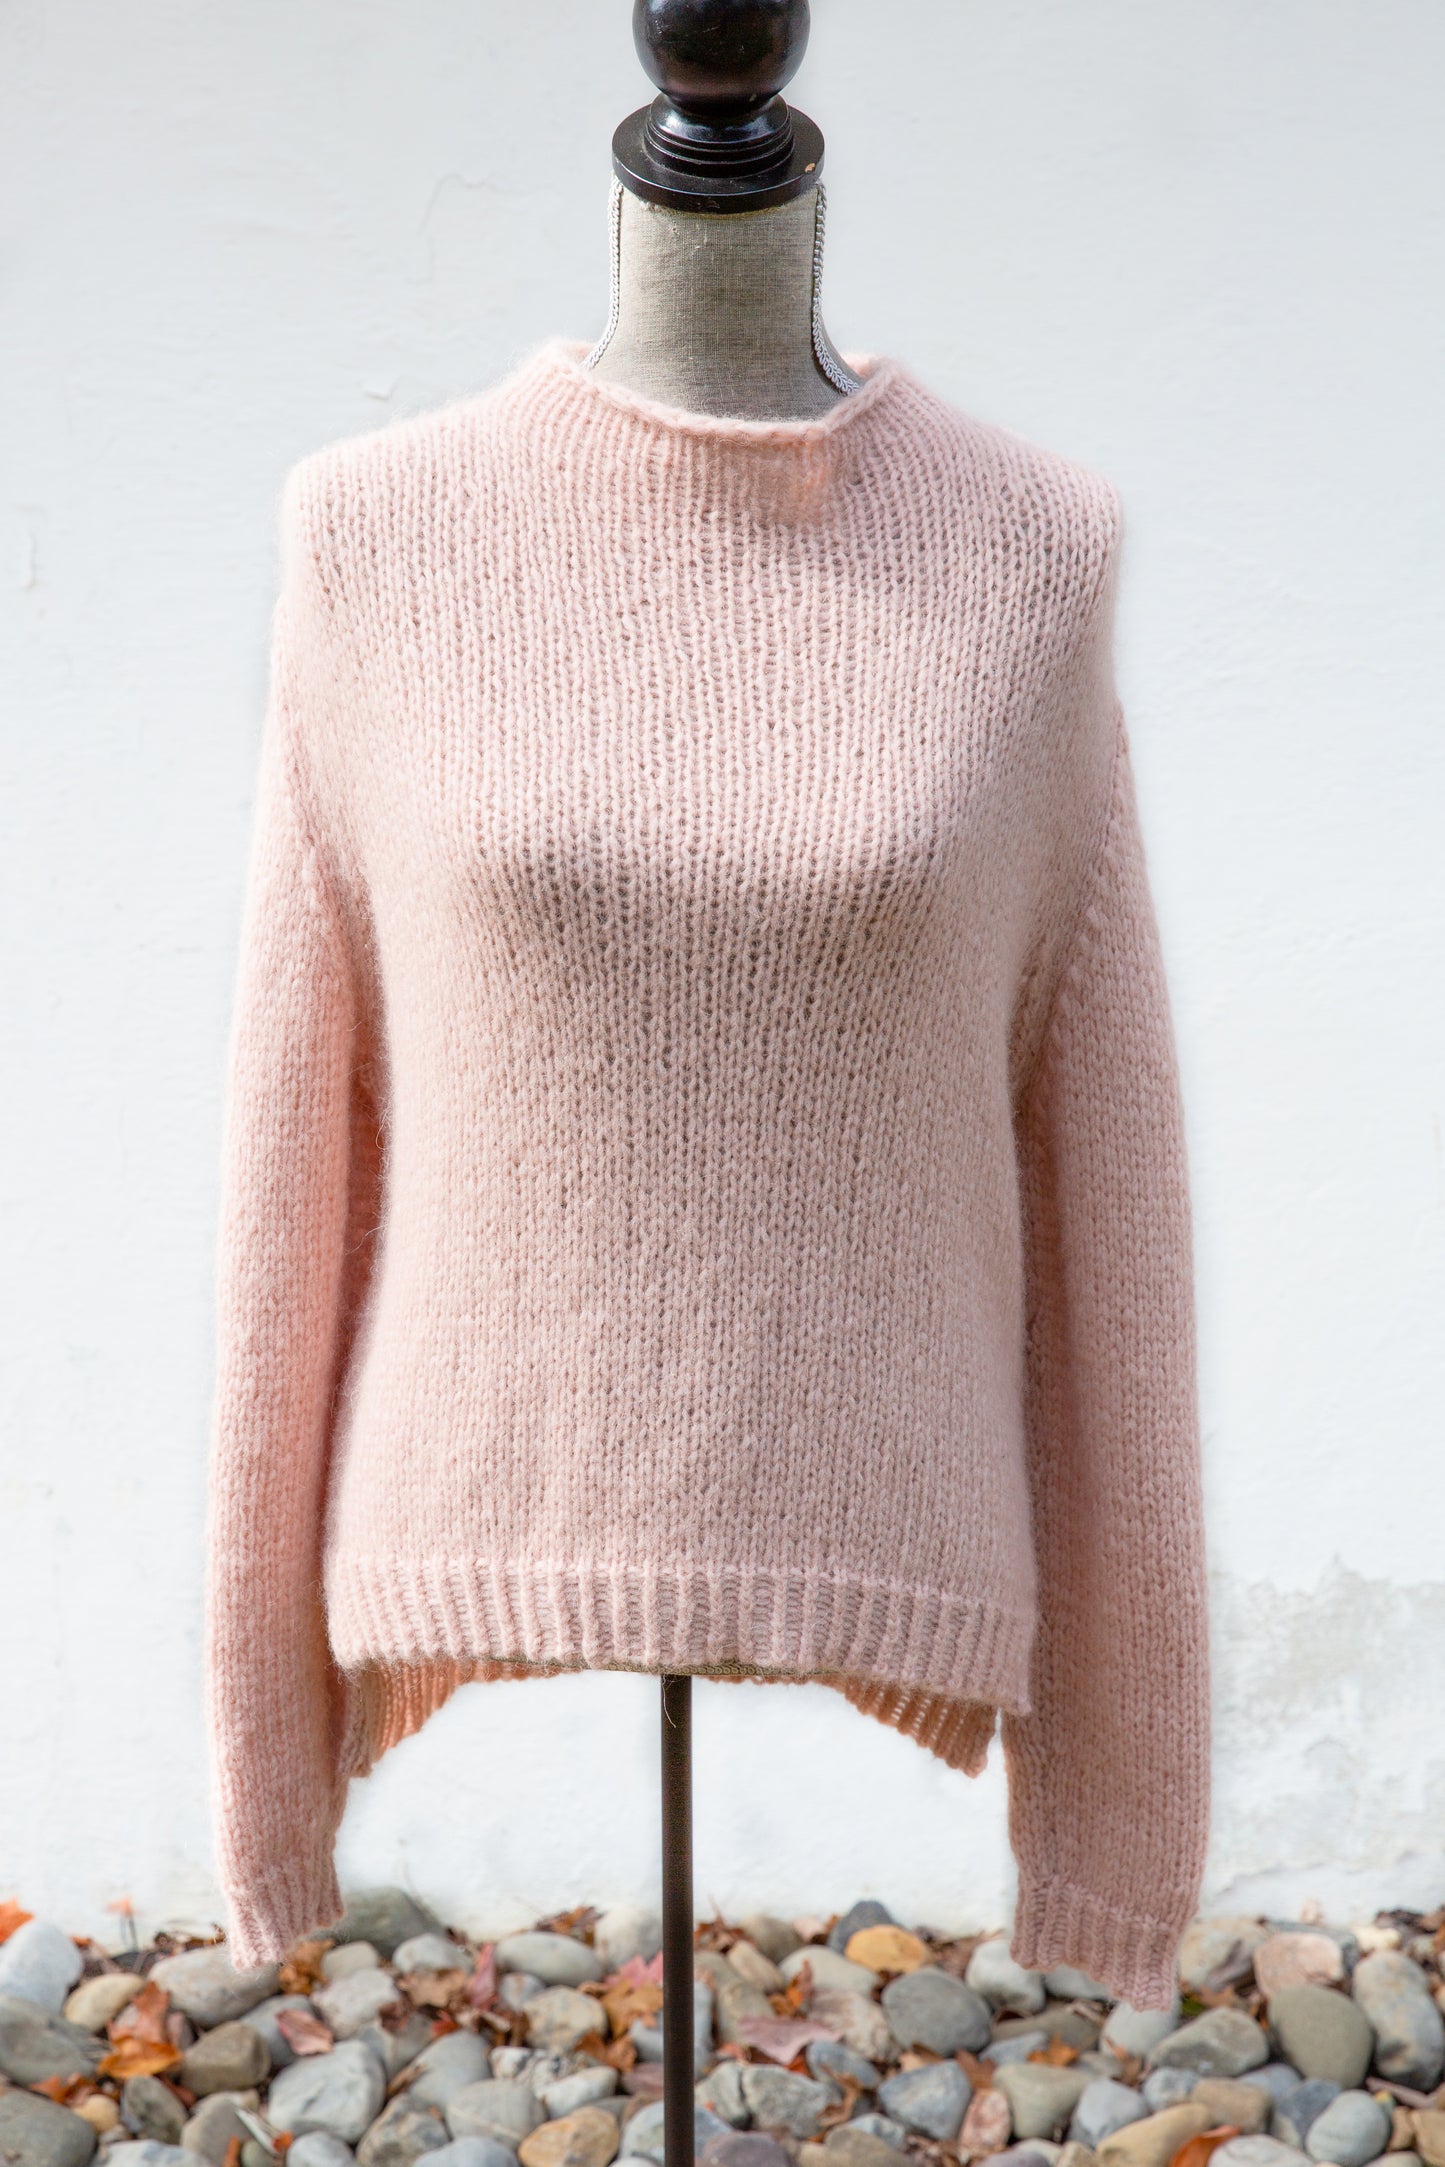 Chikan pullover knitting kit